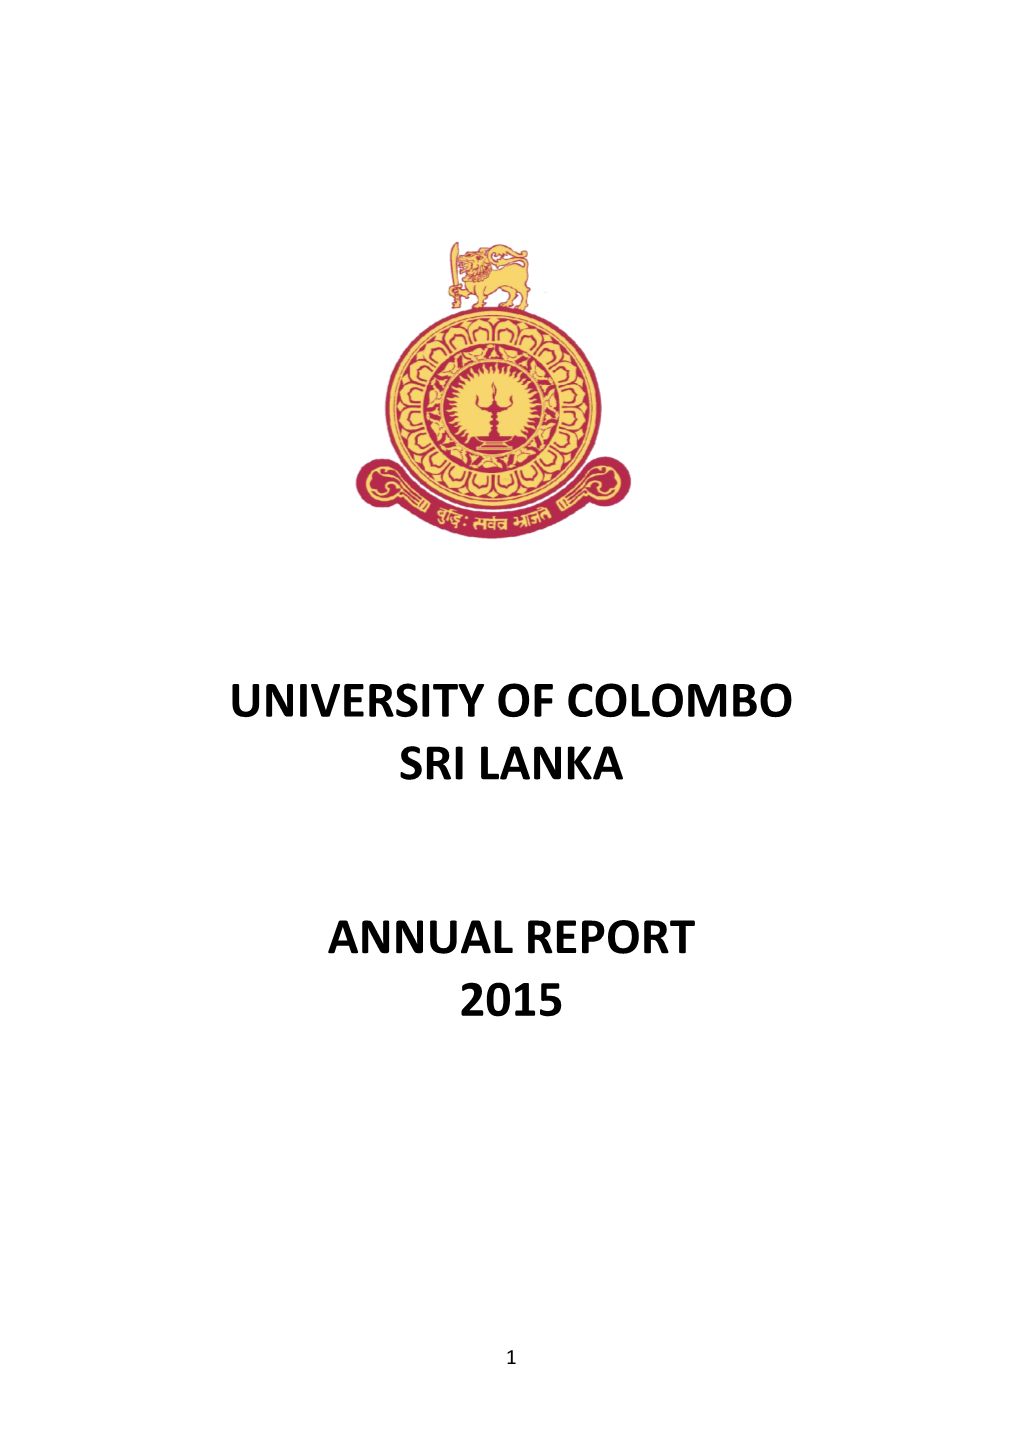 University of Colombo Sri Lanka Annual Report 2015